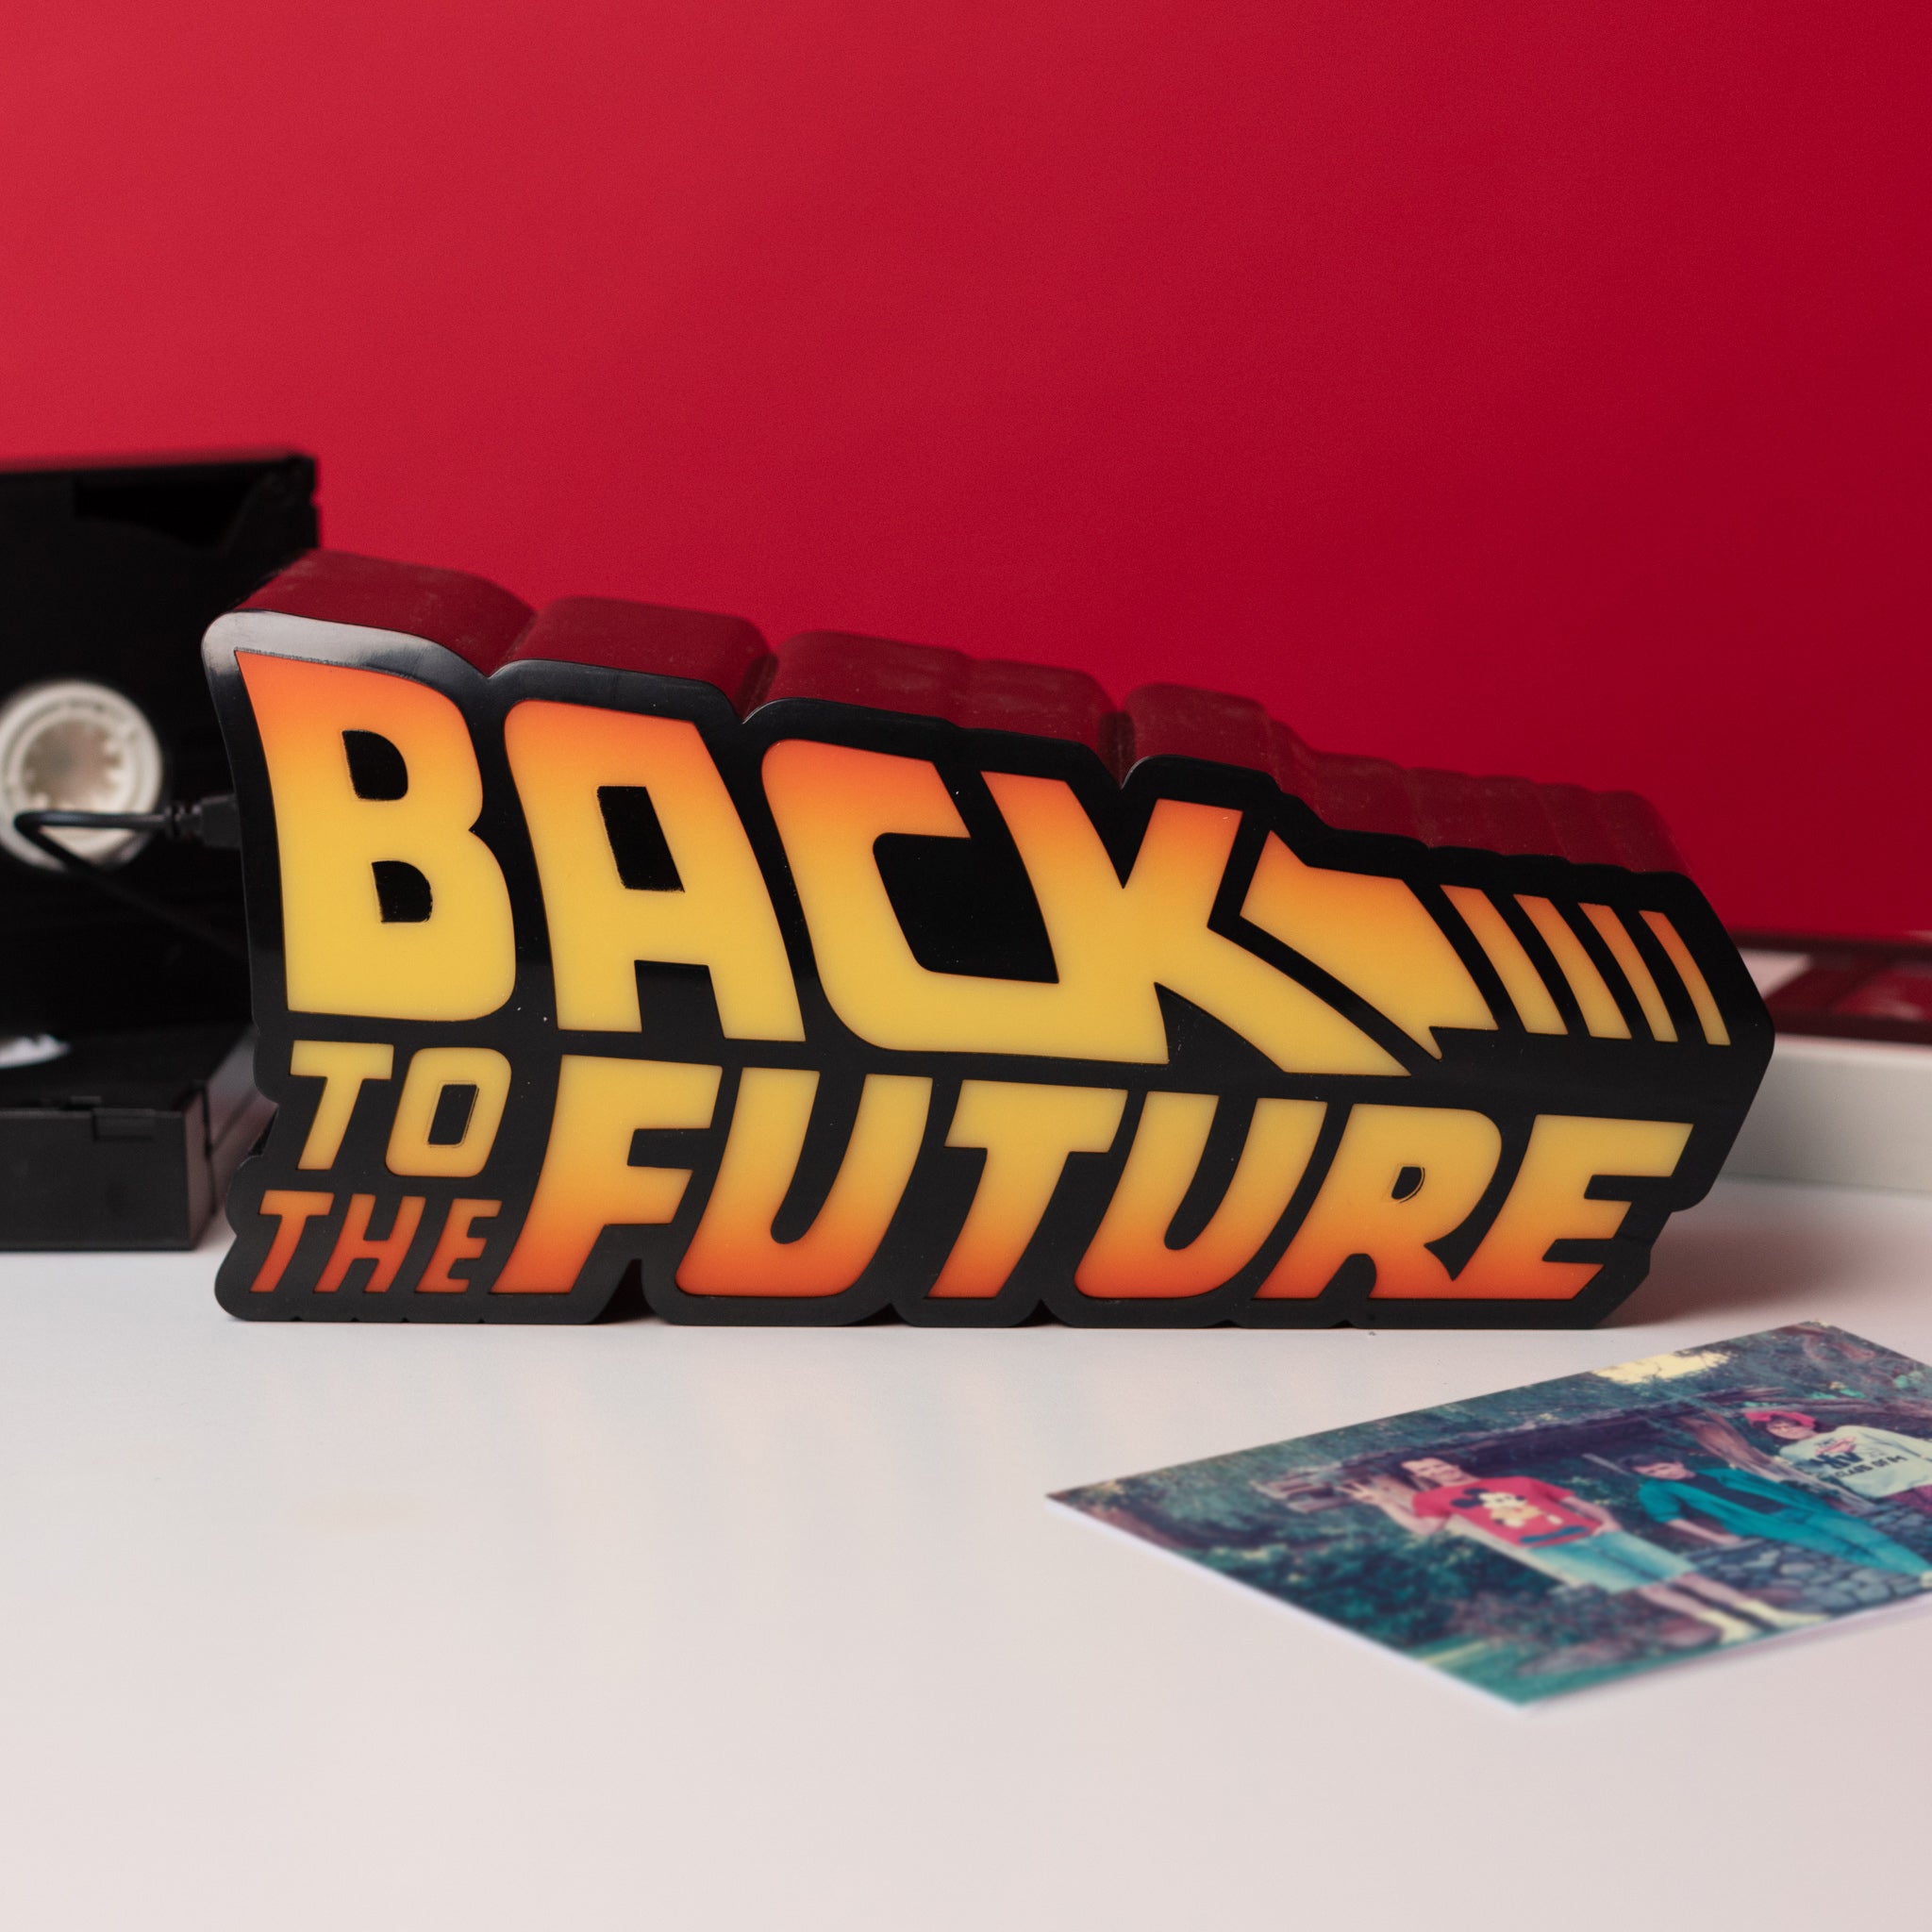 Back To The Future Logo Light